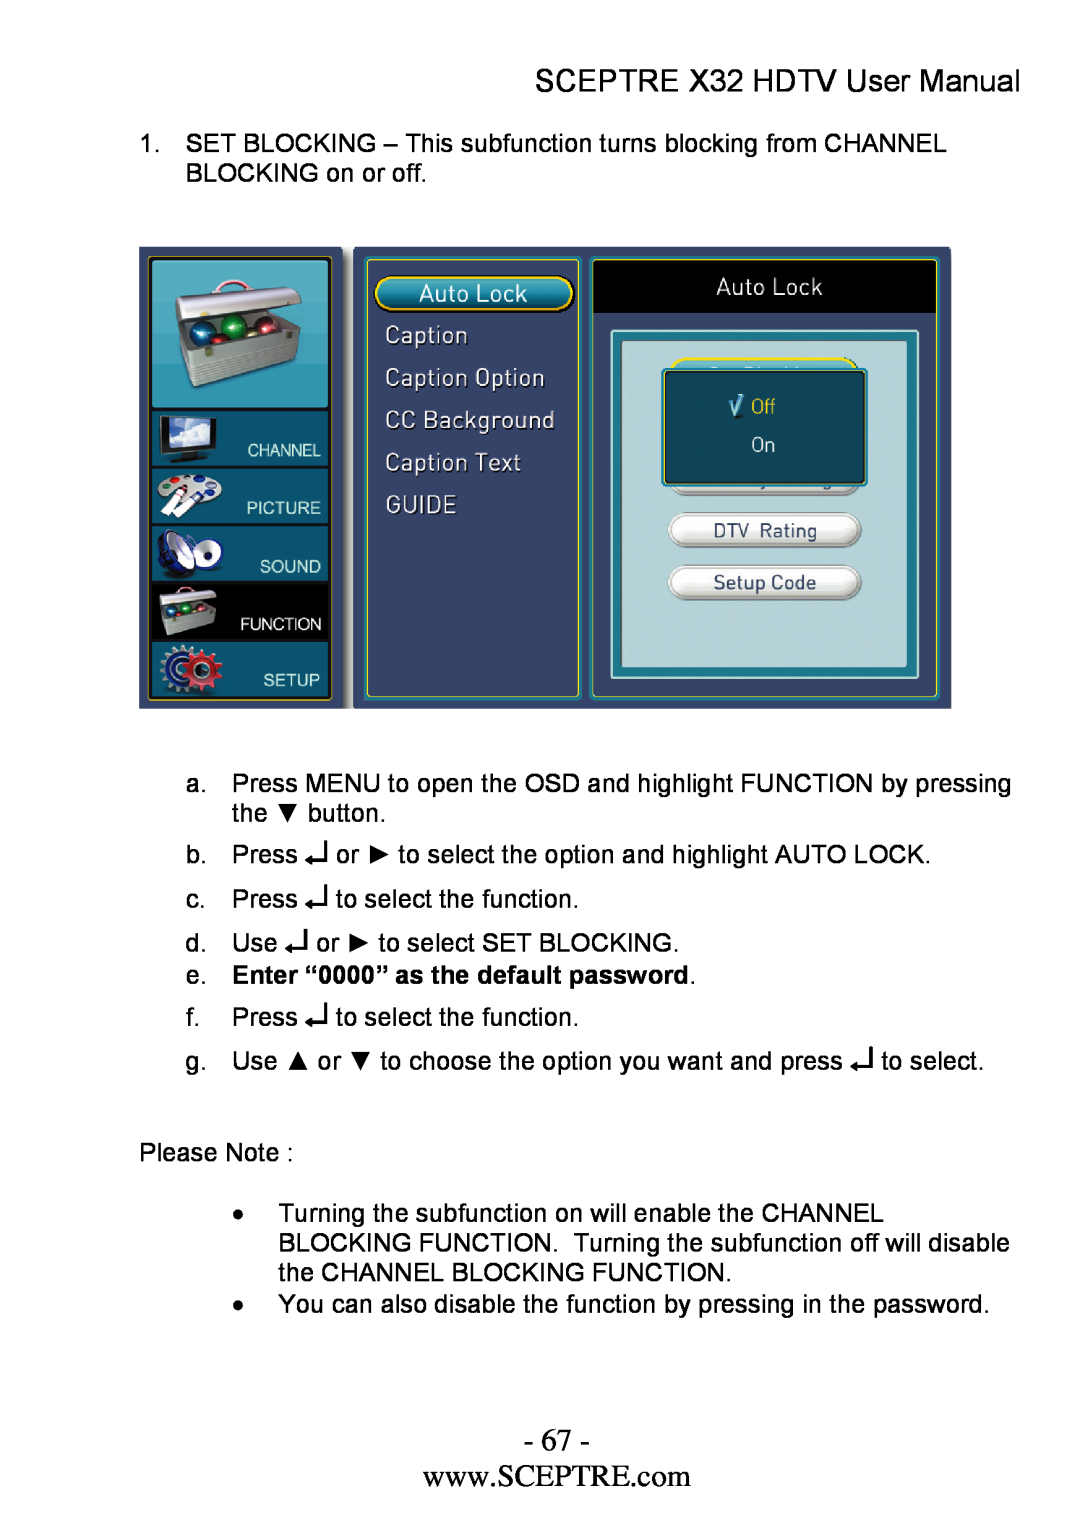 Sceptre Technologies x32 user manual SCEPTRE X32 HDTV User Manual, e. Enter “0000” as the default password 